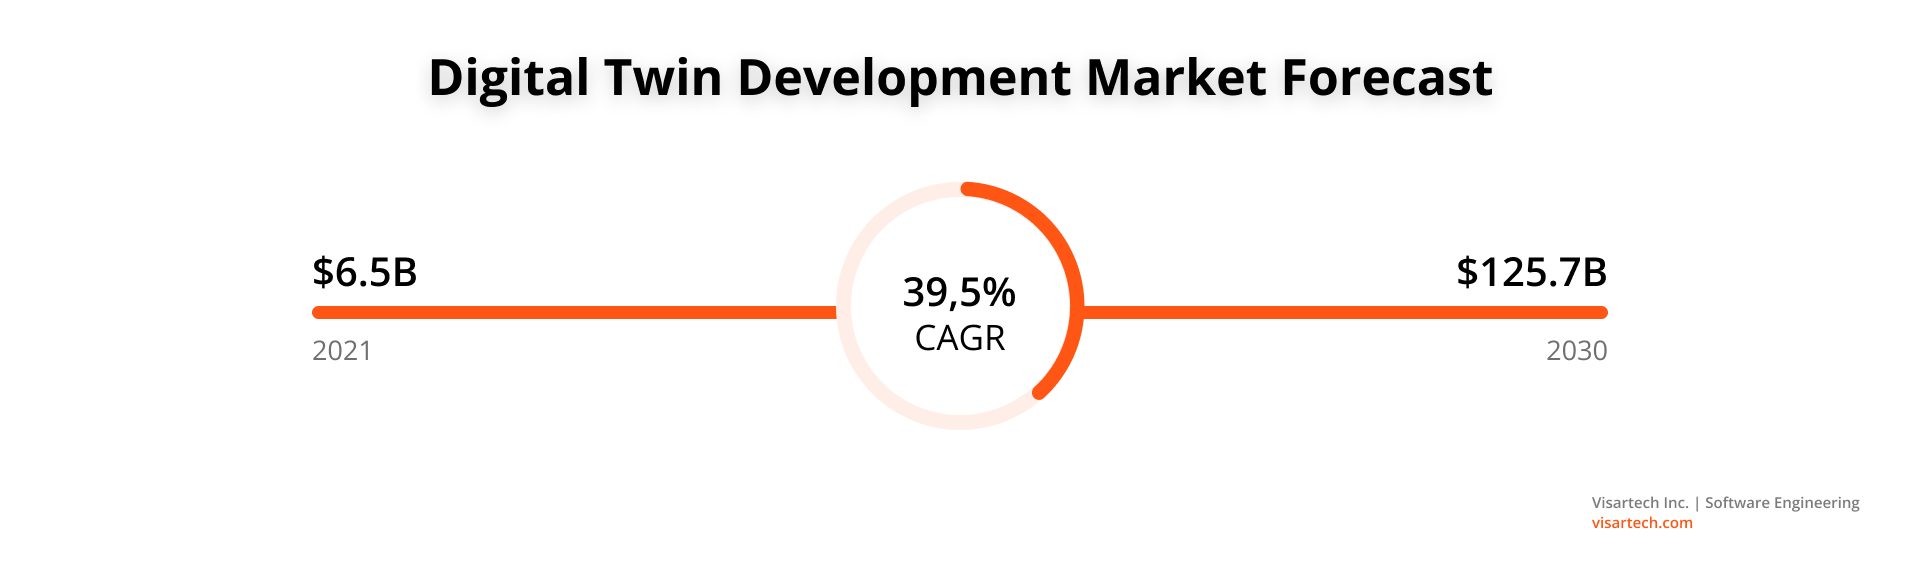 Digital Twin Development Market Forecast - Visartech Blog